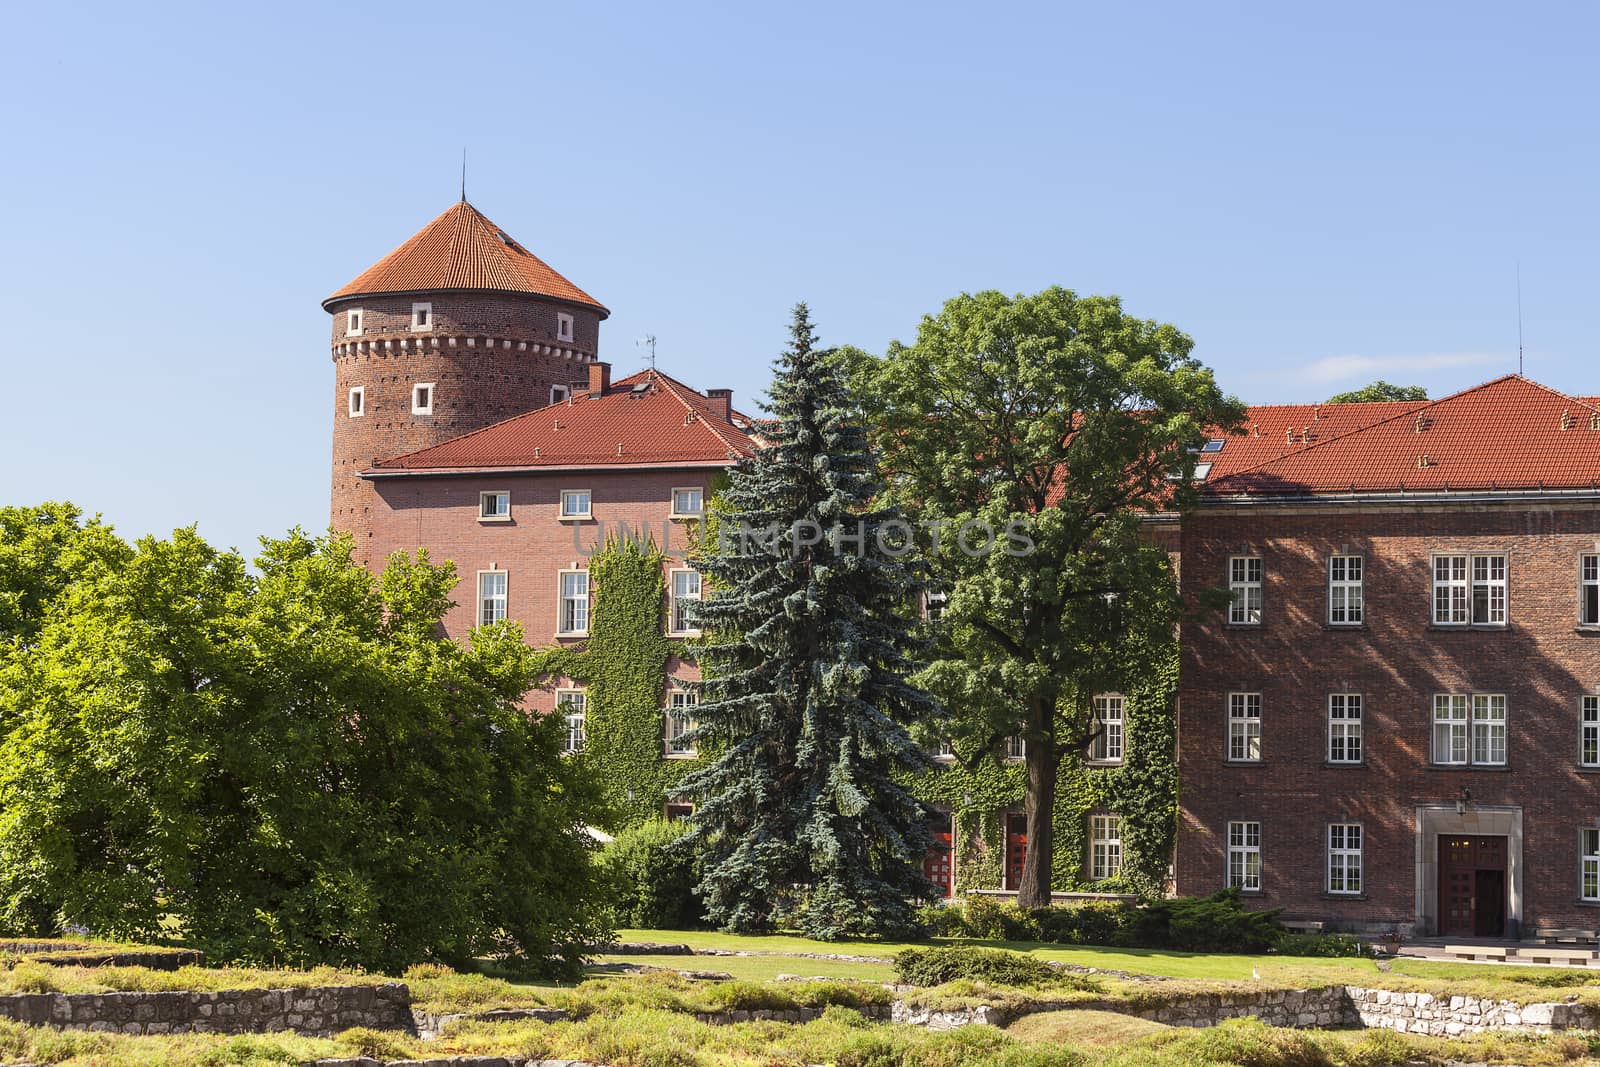 Wawel Royal Castle with Sandomierska Tower, Krakow, Poland.